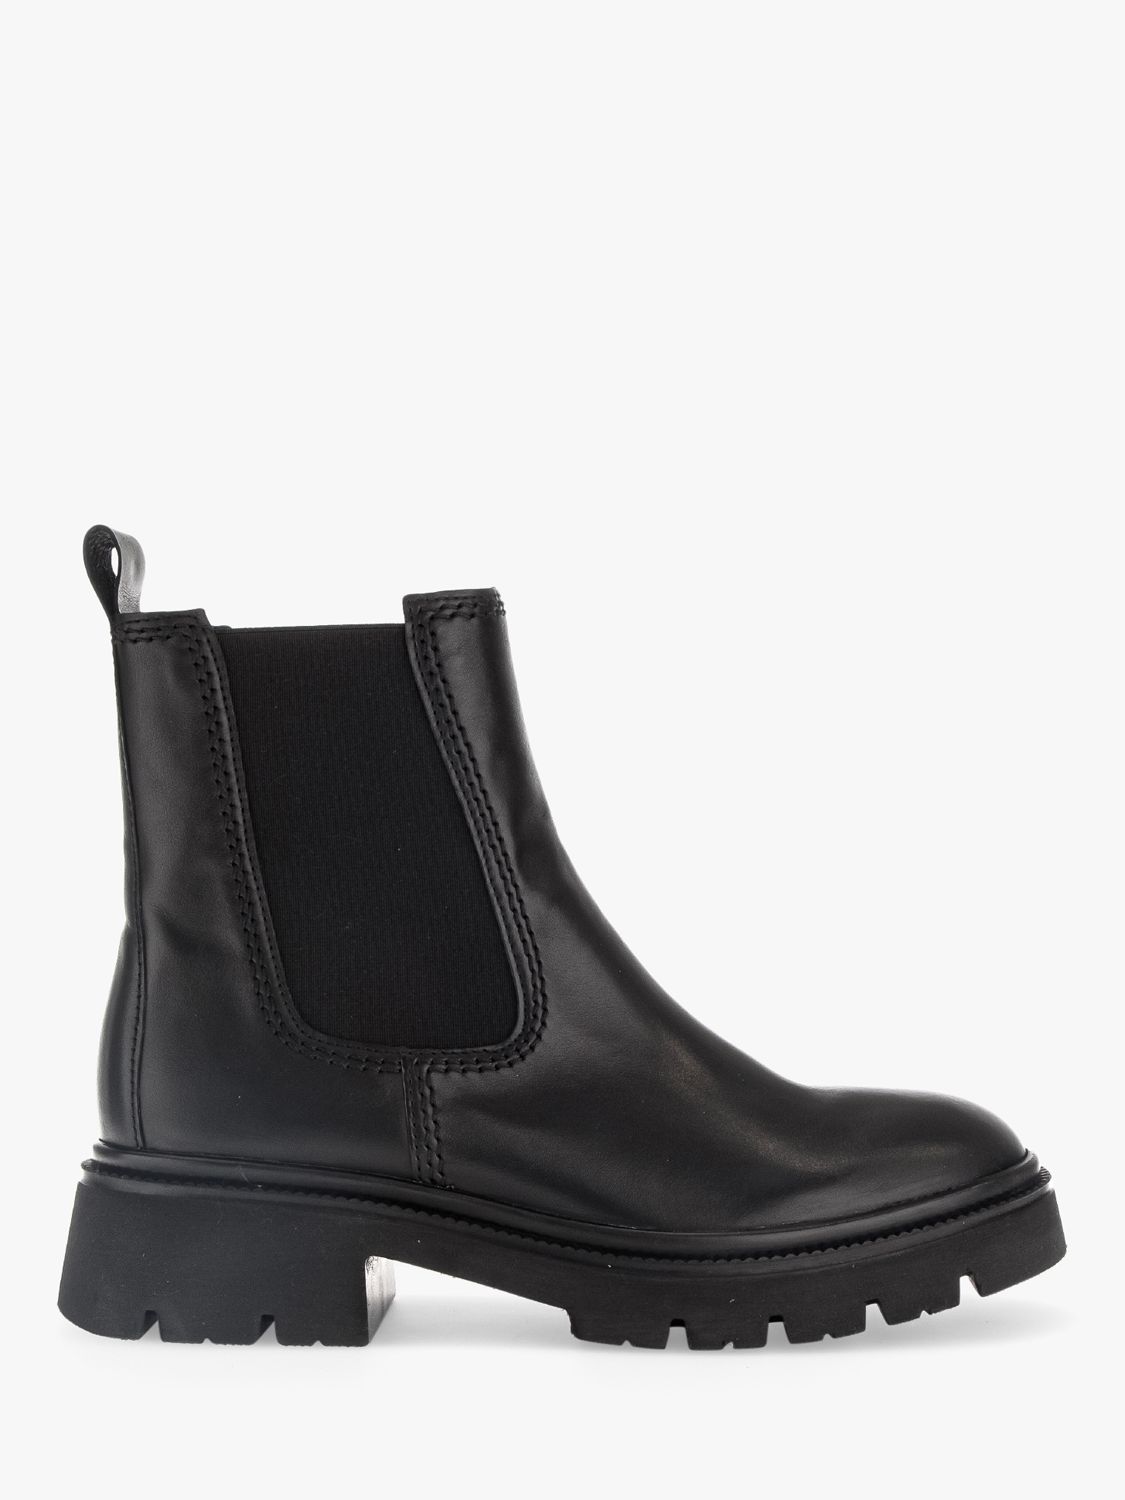 Gabor Marissa Leather Chelsea Boots, Black at John Lewis & Partners